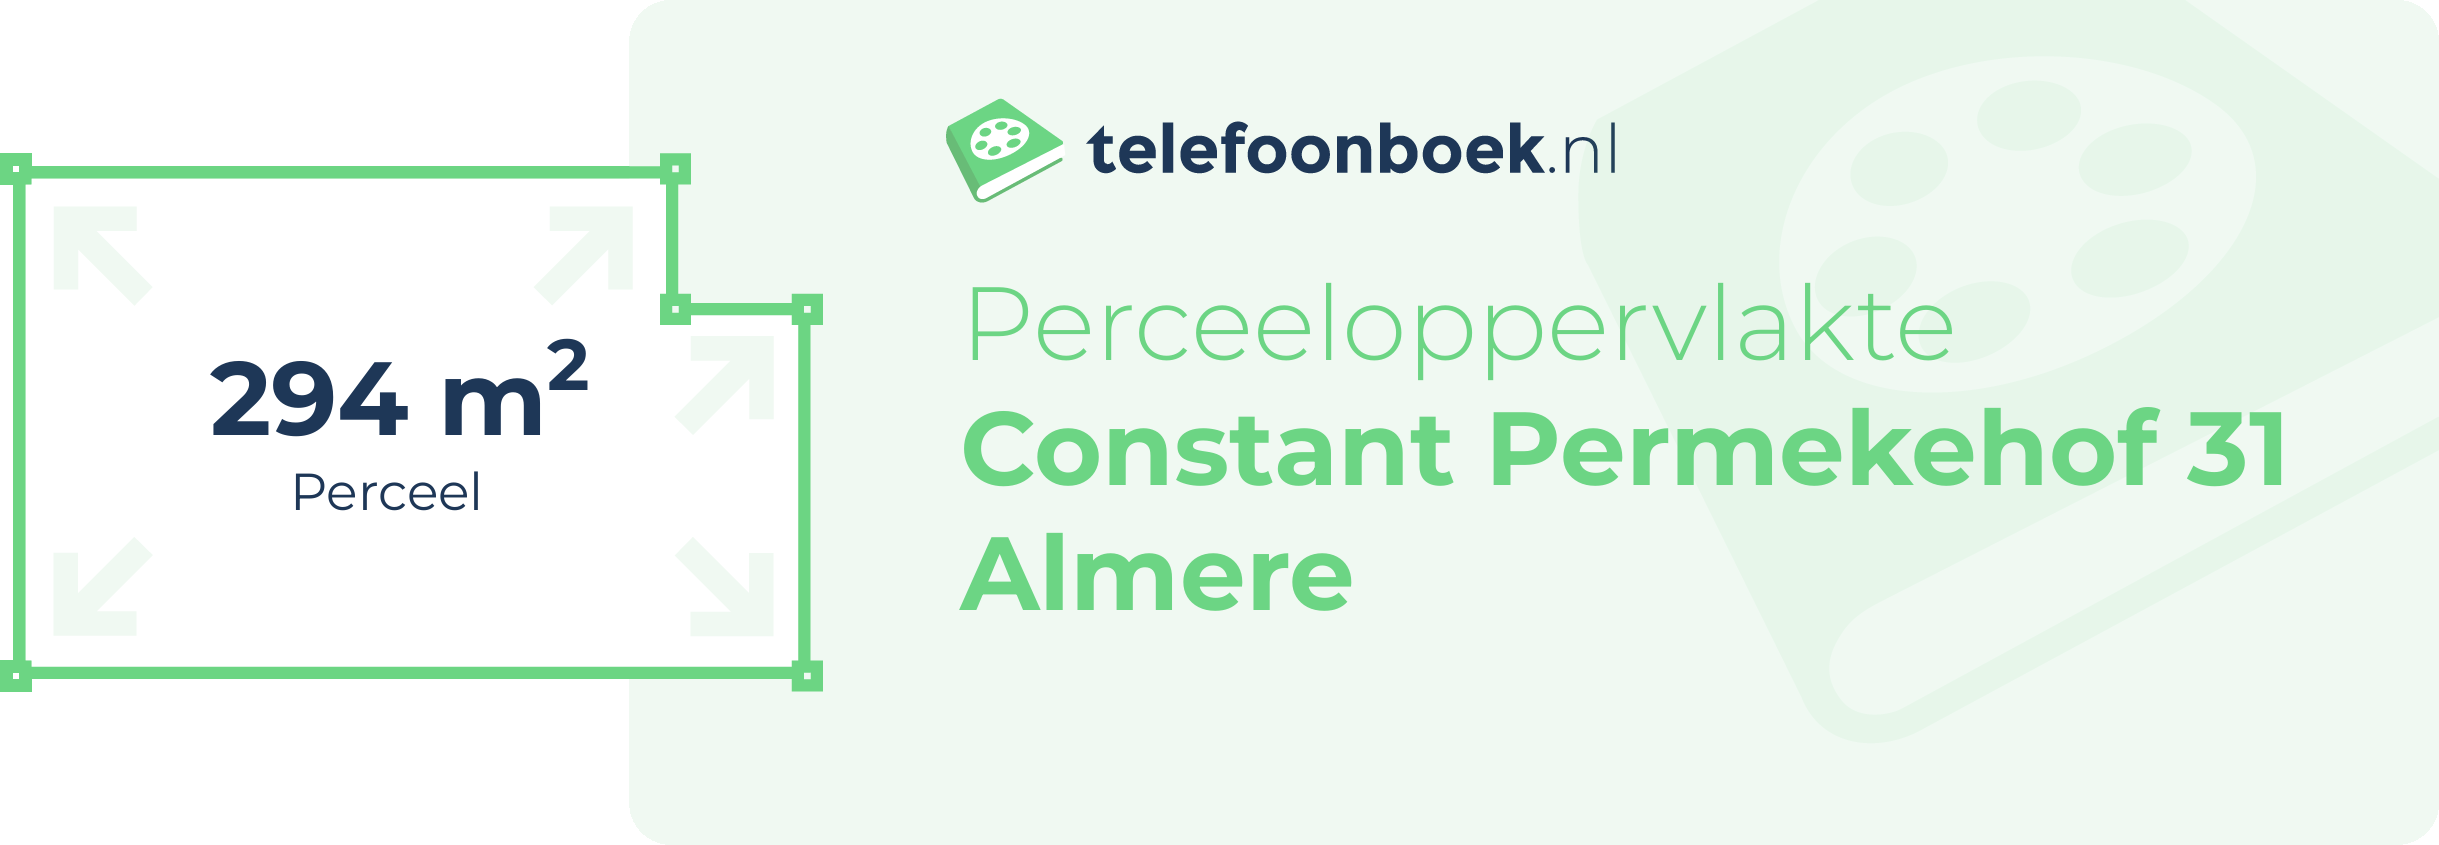 Perceeloppervlakte Constant Permekehof 31 Almere